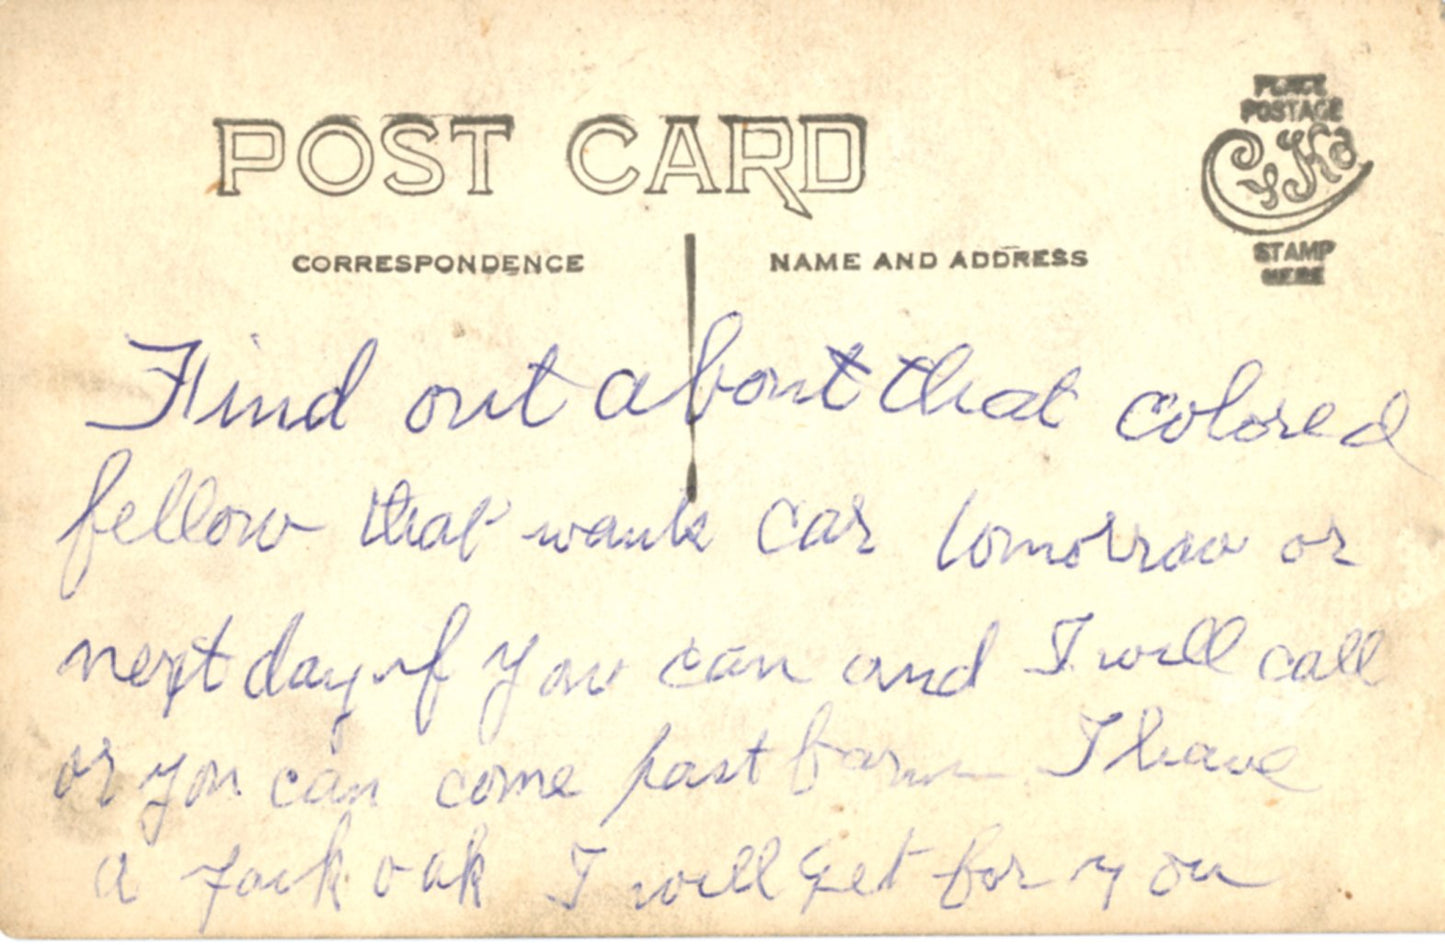 Early Automobile TOURING SEDAN CONVERTIBLE *Interesting Message* Antique Real Photo Postcard Circa 1904 - 1920s